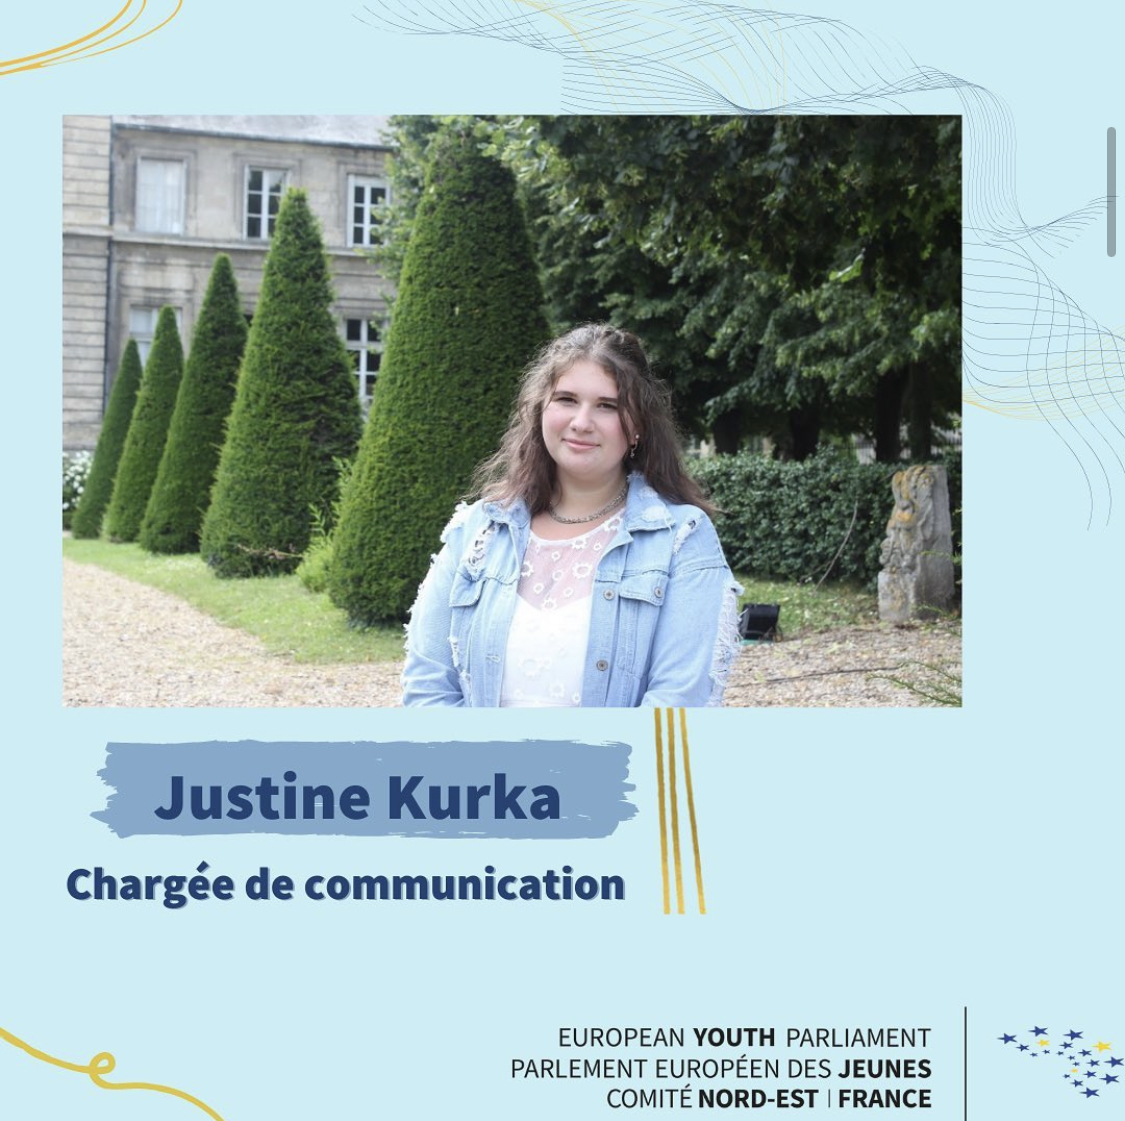 Justine Kurka